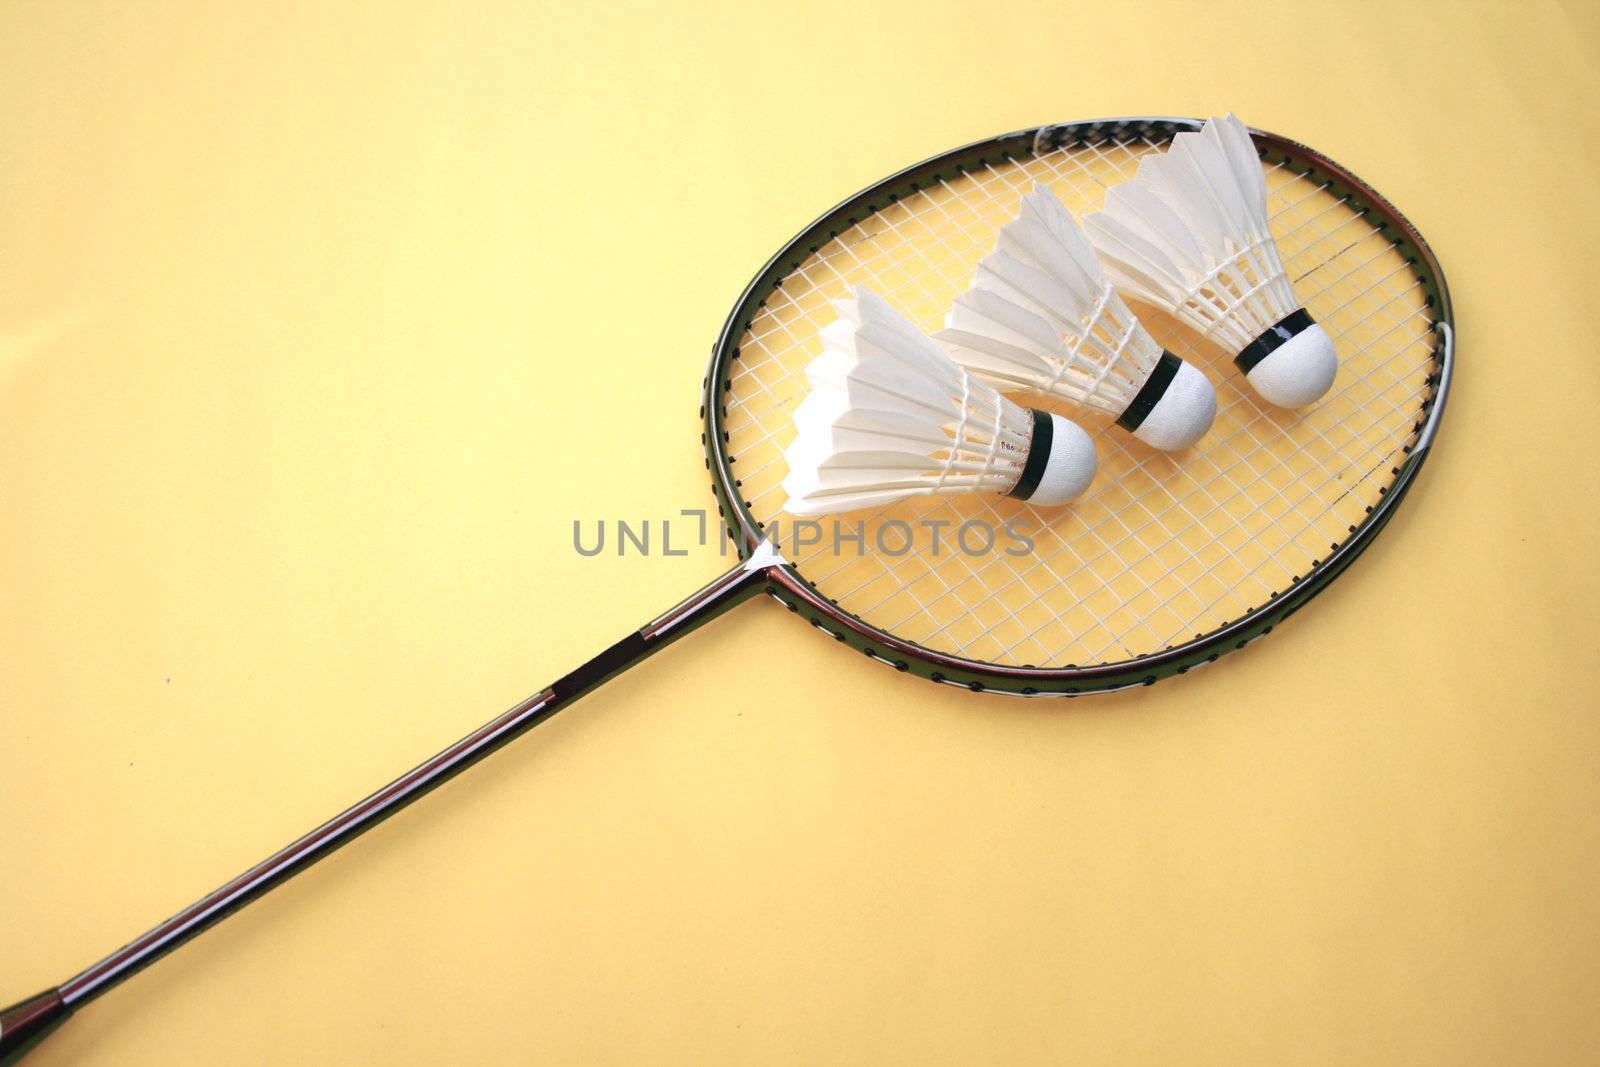 badminton racket and shuttlecocks by jonasbsl